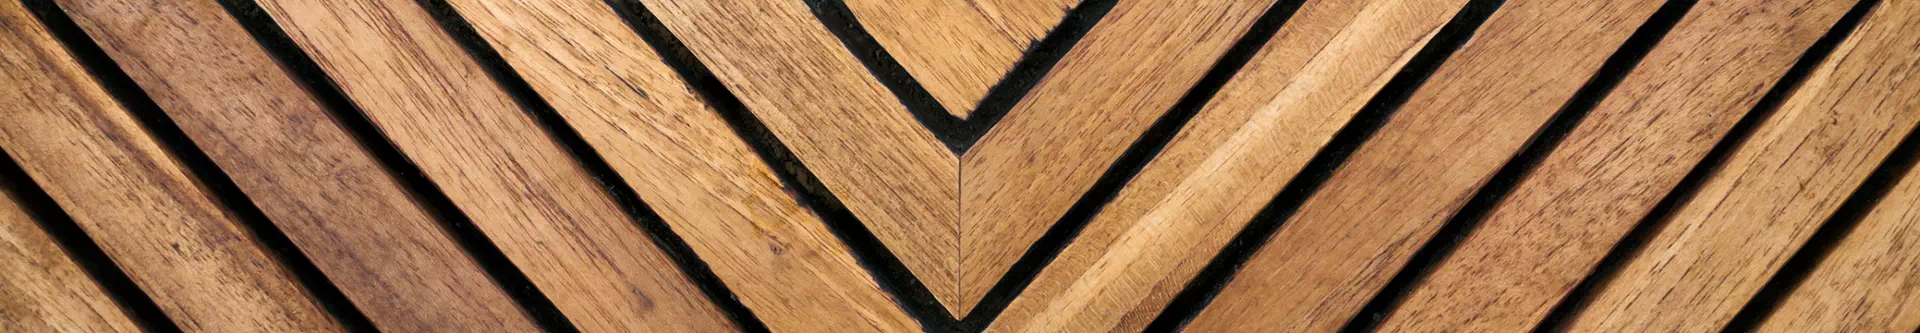 Drewniana podłoga